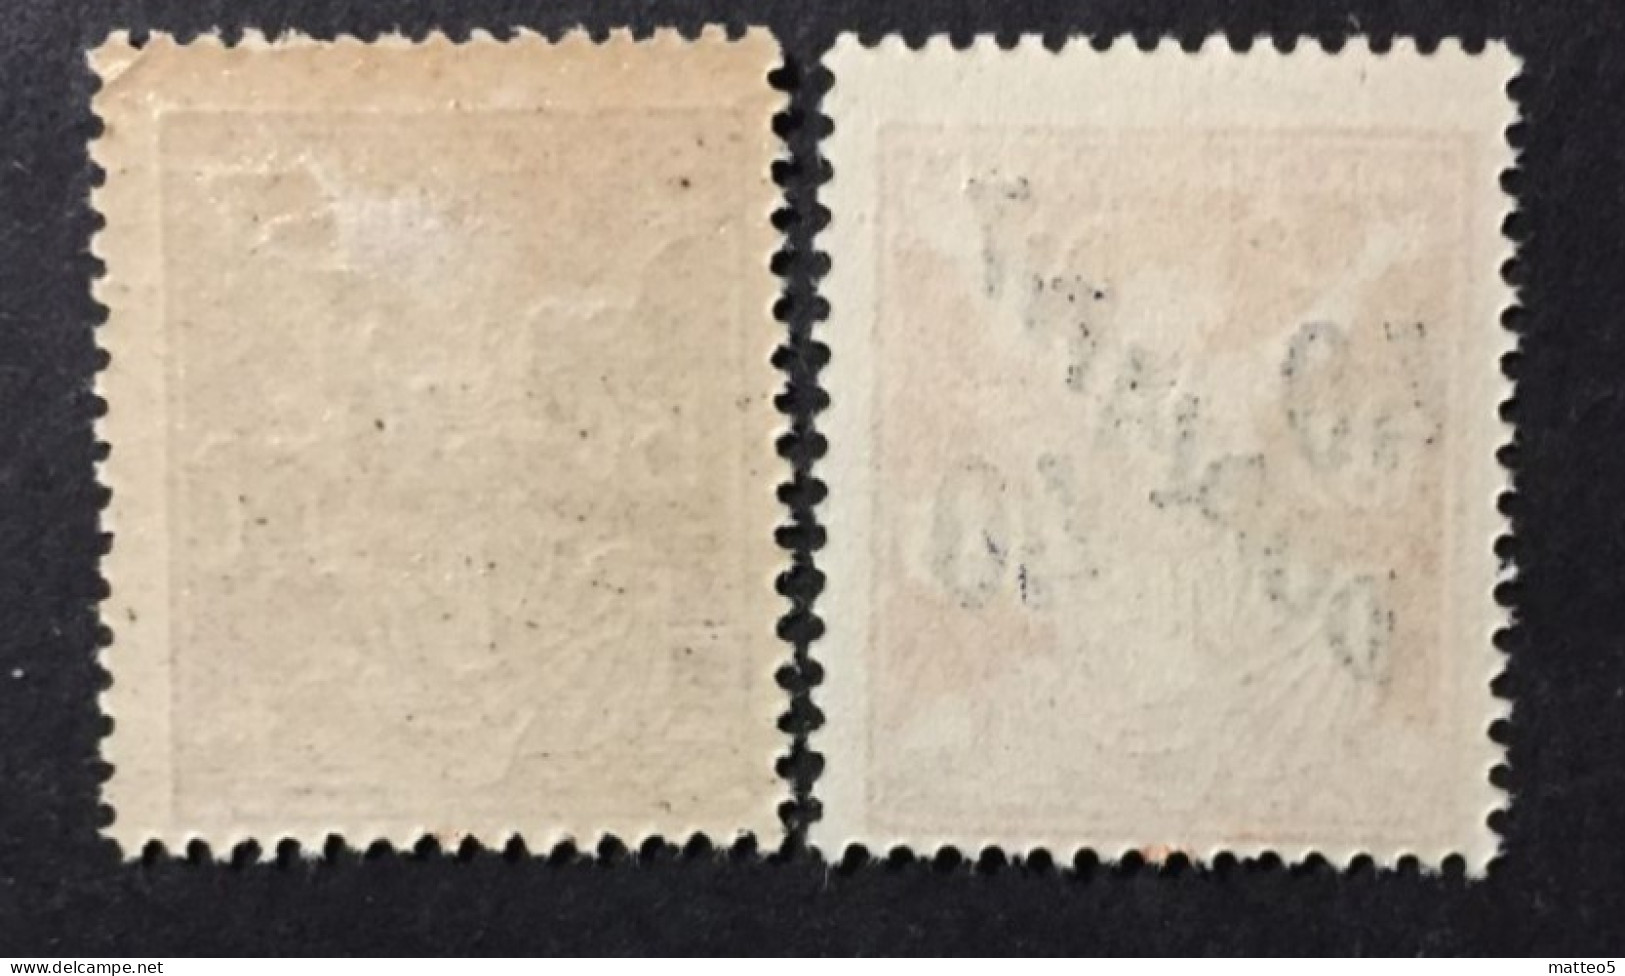 1920 /27  Czechoslovakia - Postage Due Stamps Overprint DOPLATIT - Unused - Ungebraucht